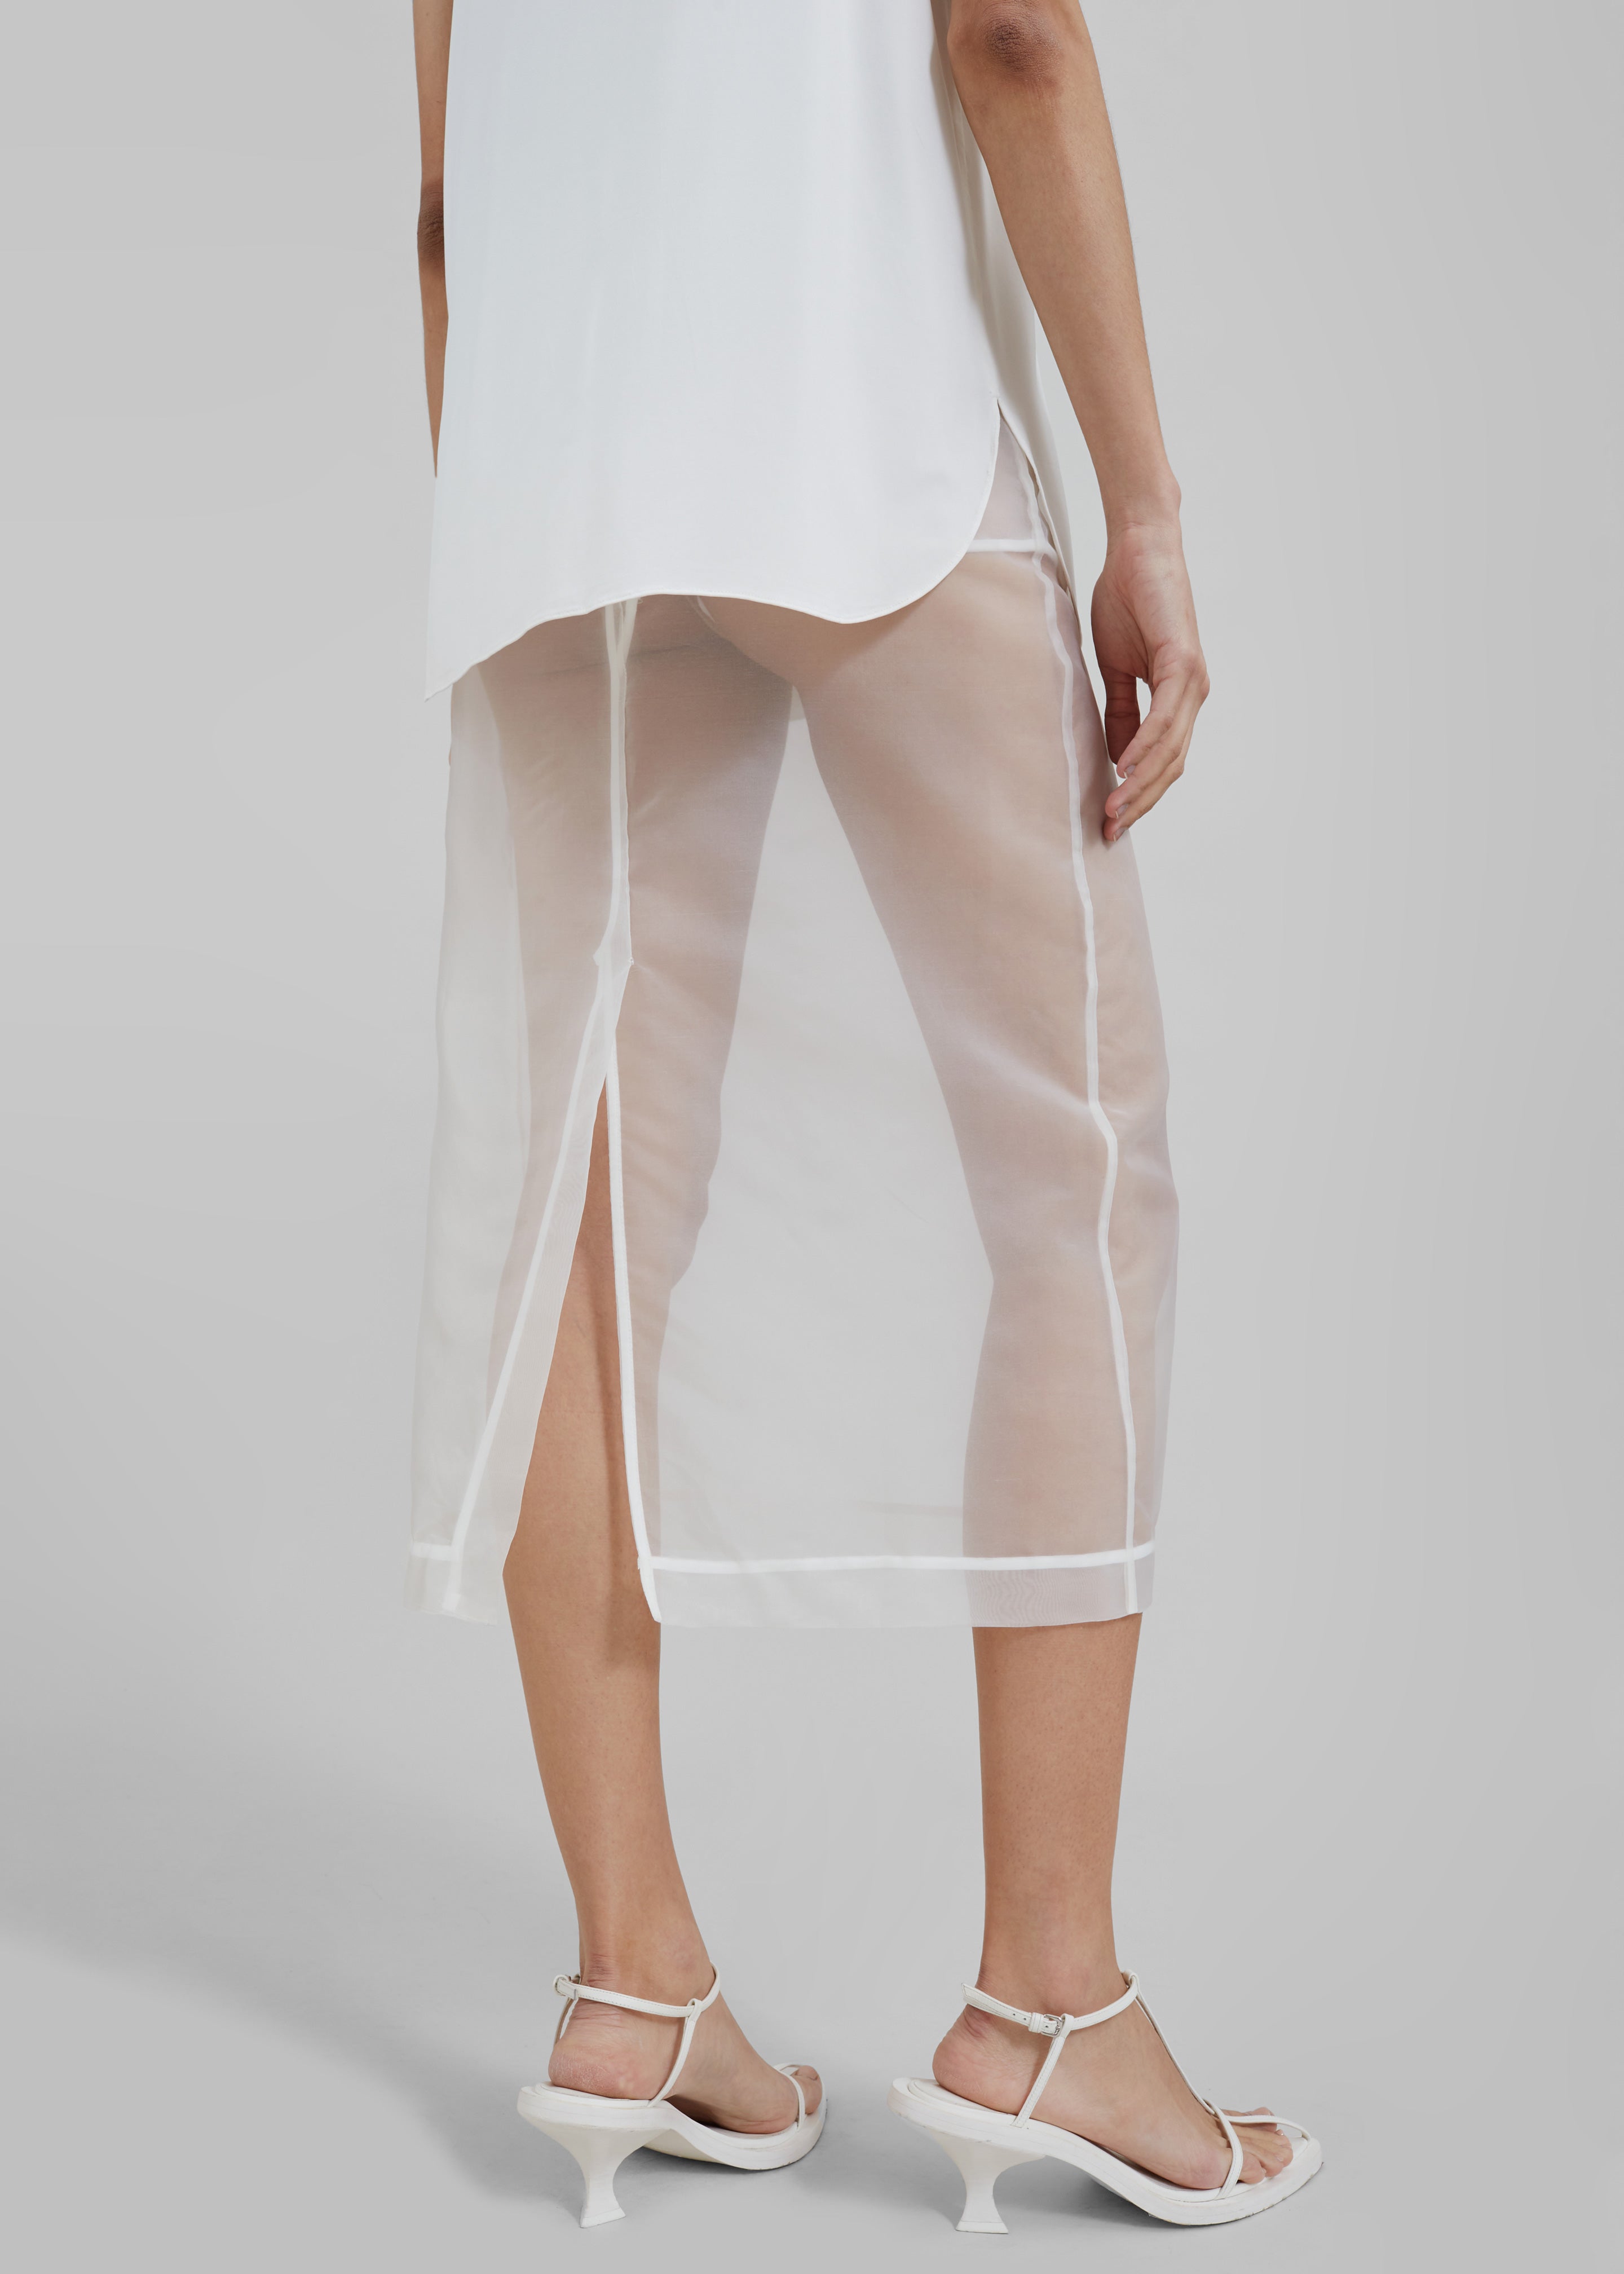 Peri Sheer Midi Skirt - White - 5